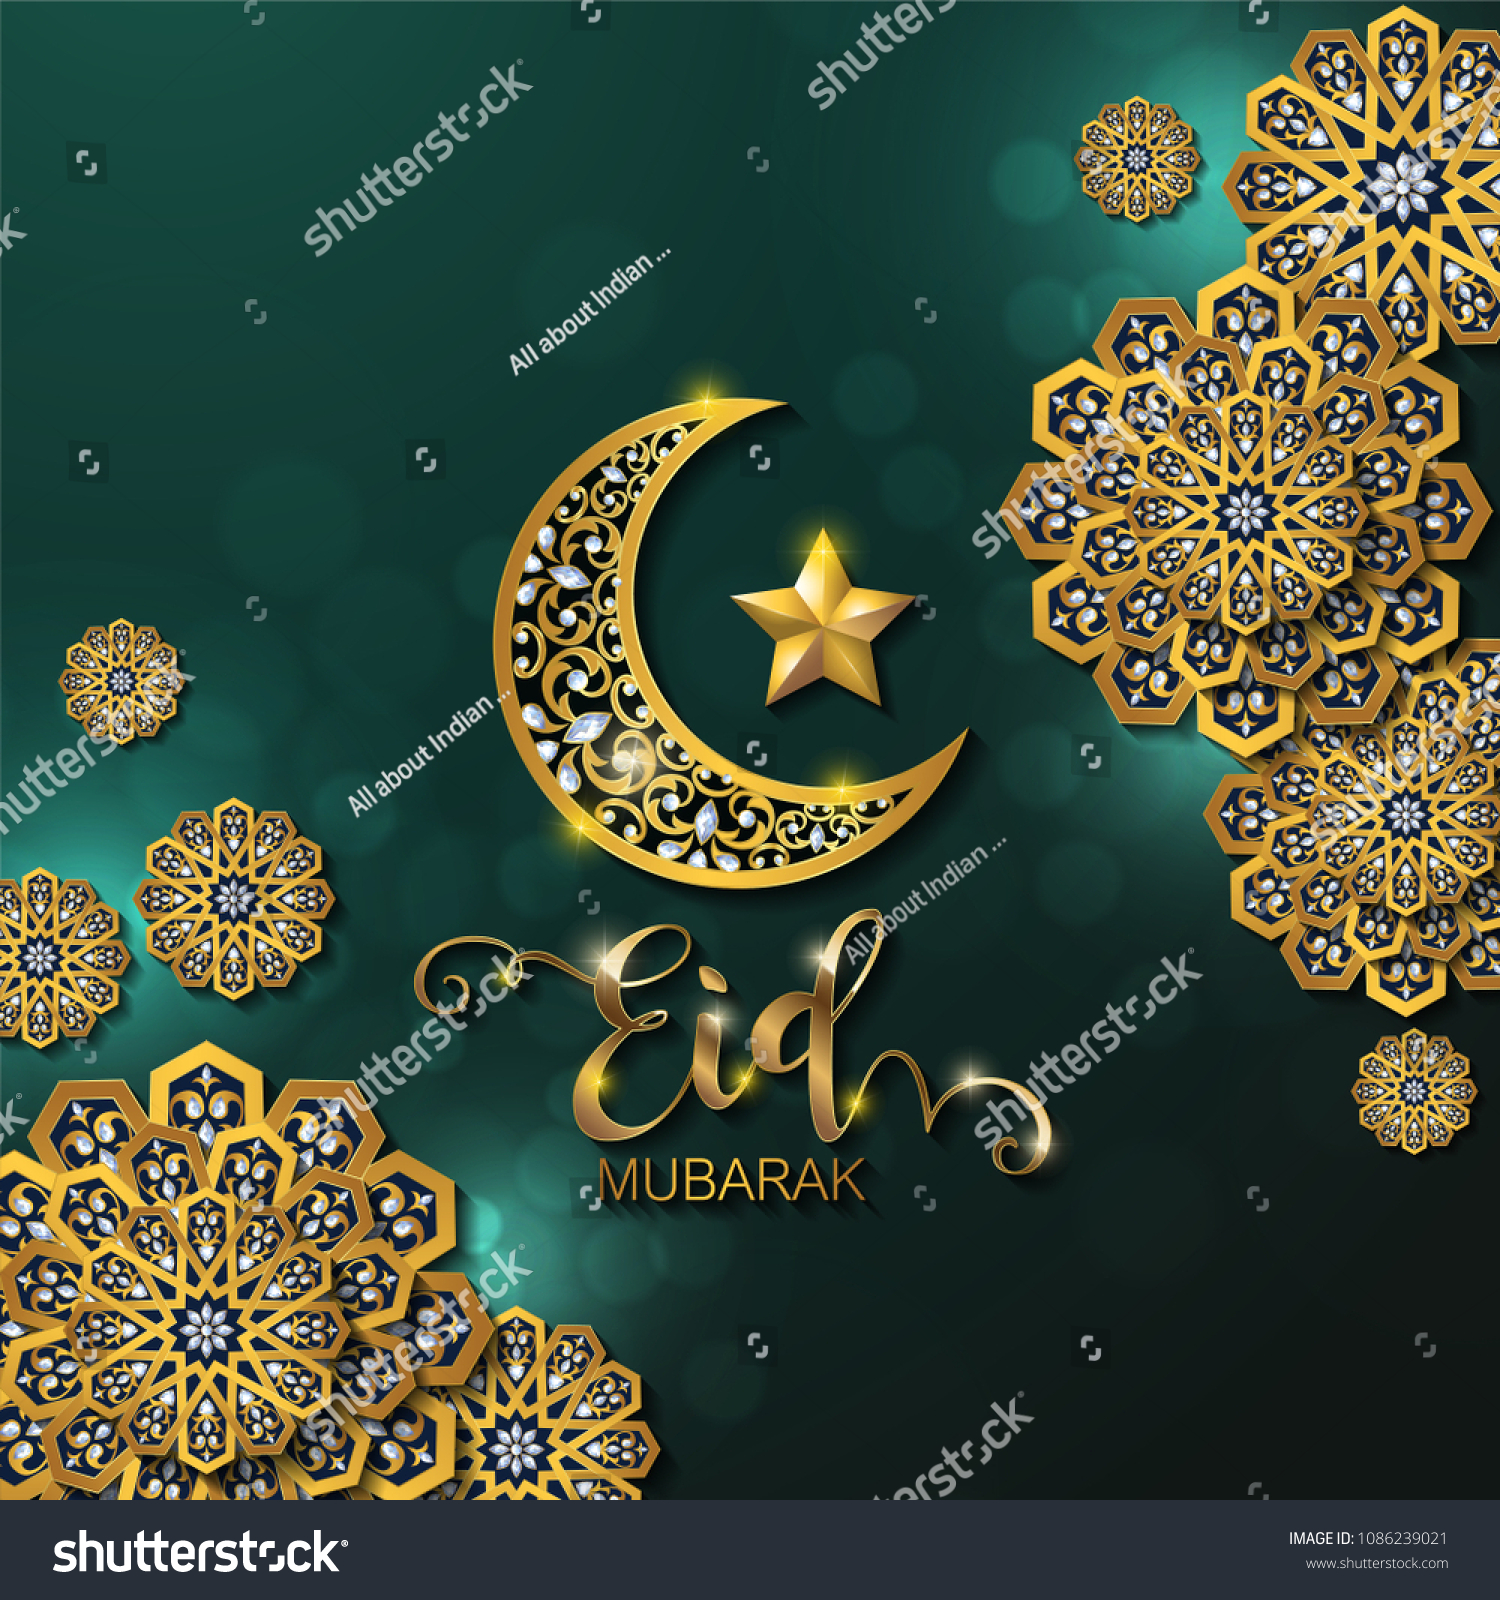 Eid Mubarak Greetings Background Islamic Gold Stock Vector Royalty Free 1086239021